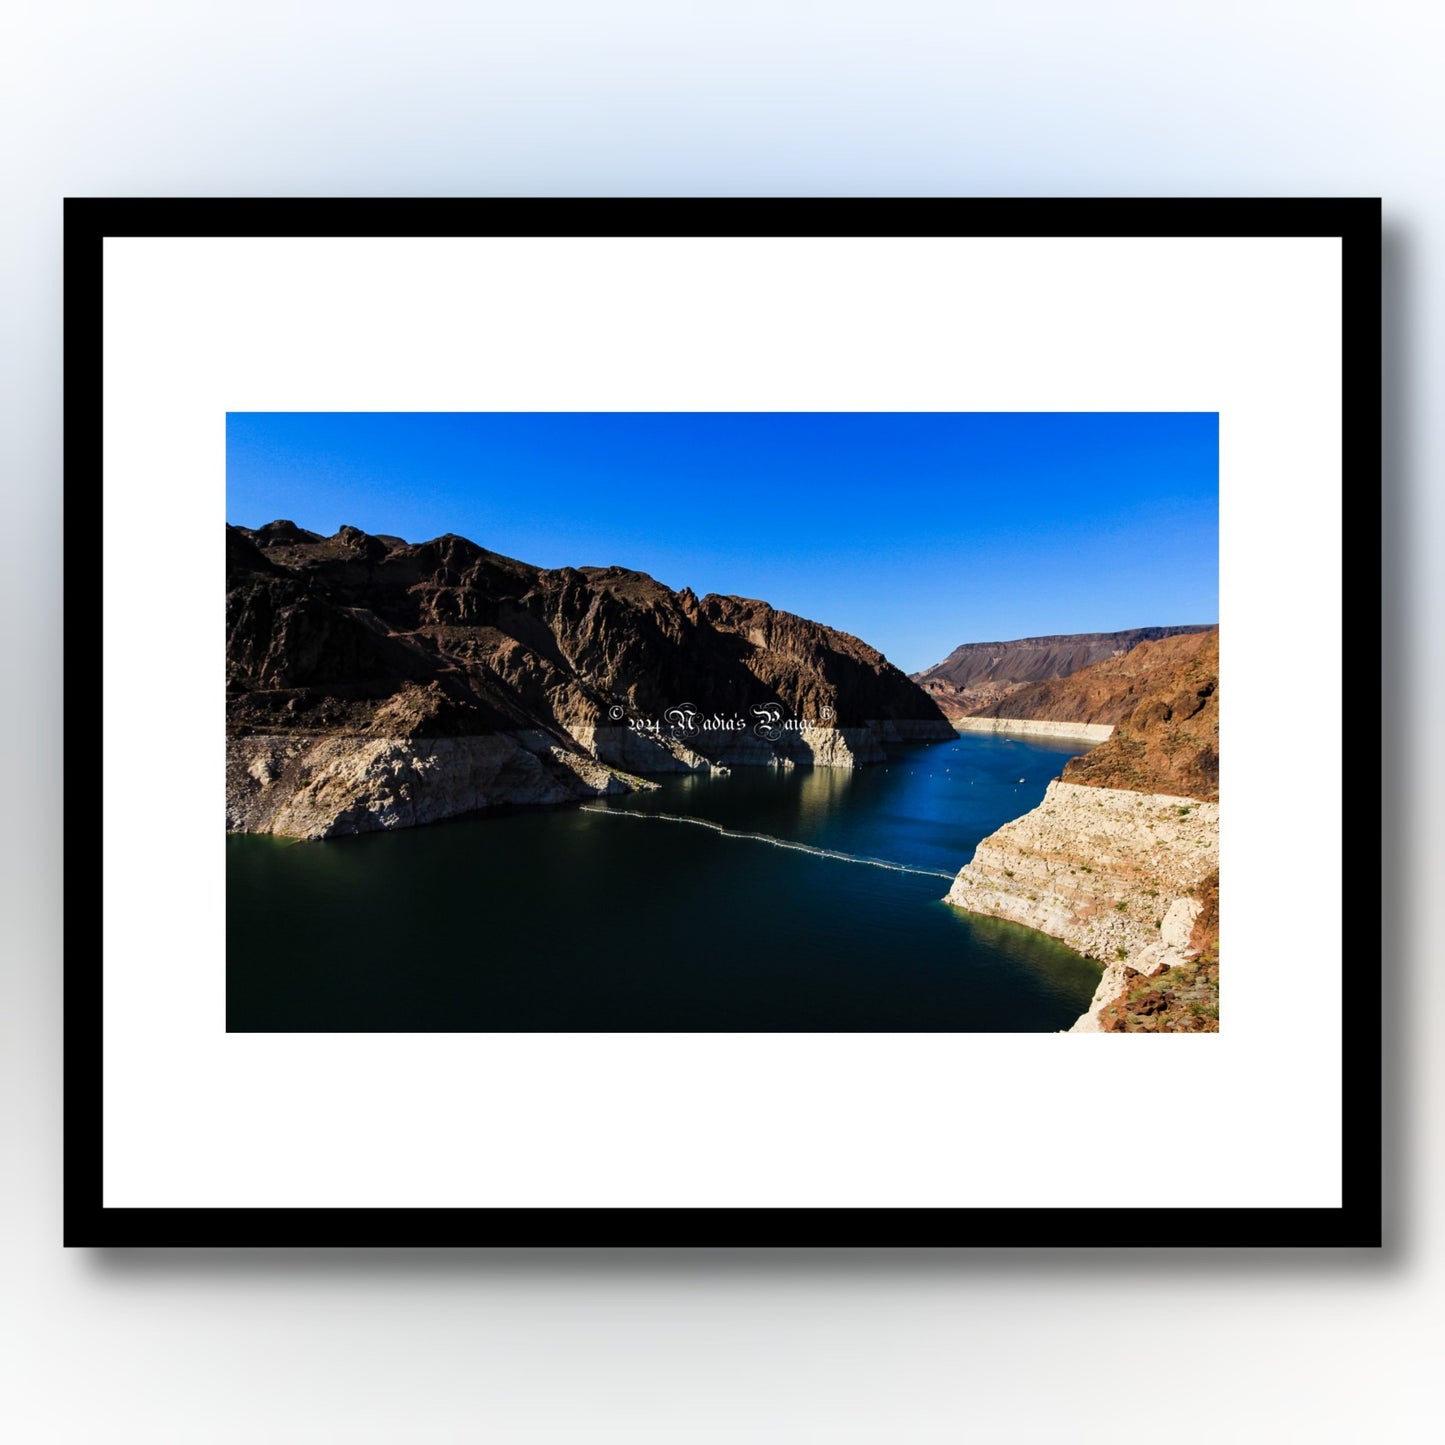 Hoover Dam Image 3